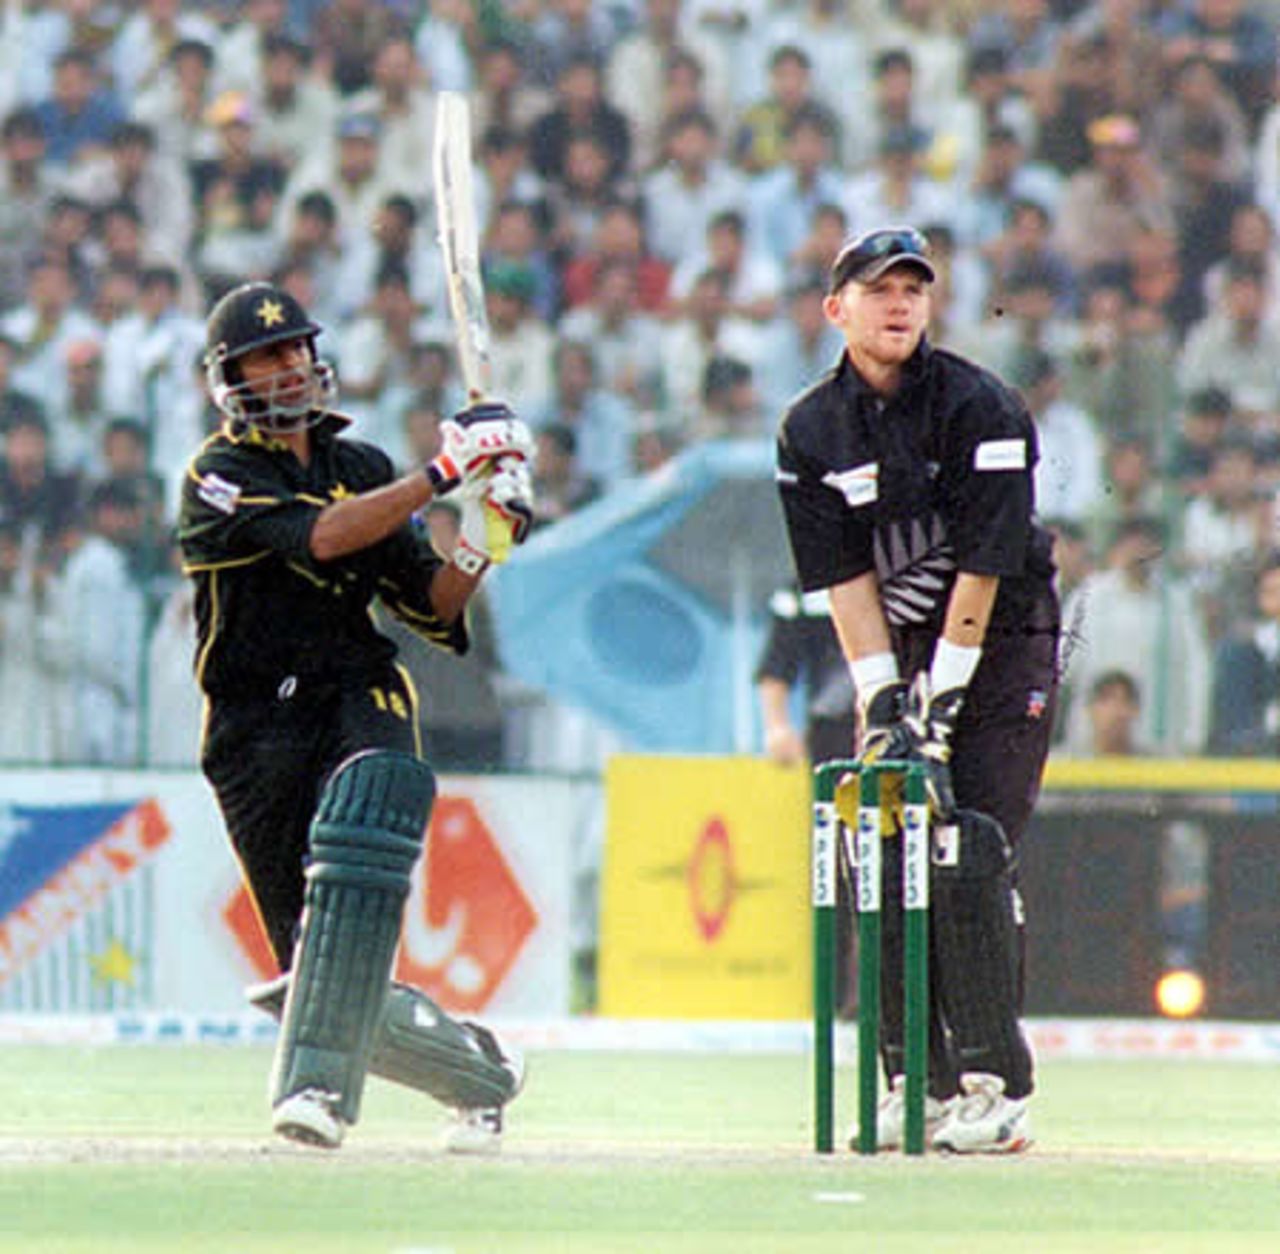 Shoaib Malik hits to leg during his 115 run innings - 3rd ODI at Lahore, New Zealand v Pakistan, 27 Apr 2002